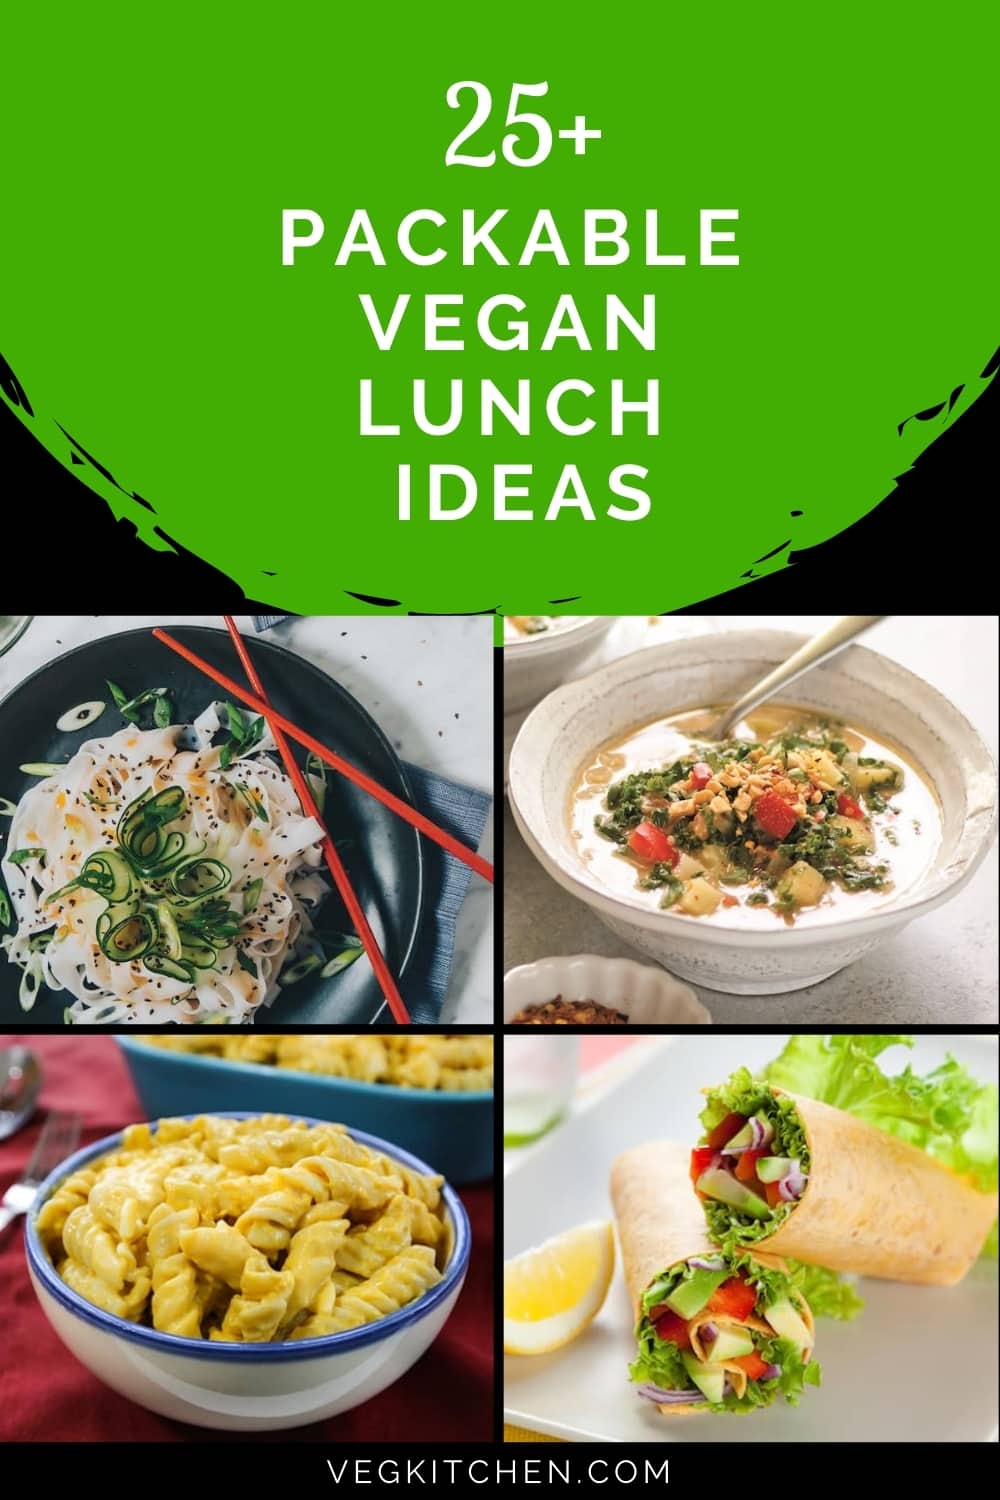 25+ Vegan Packable Lunches - Quick & Healthy Ideas - Veg Kitchen